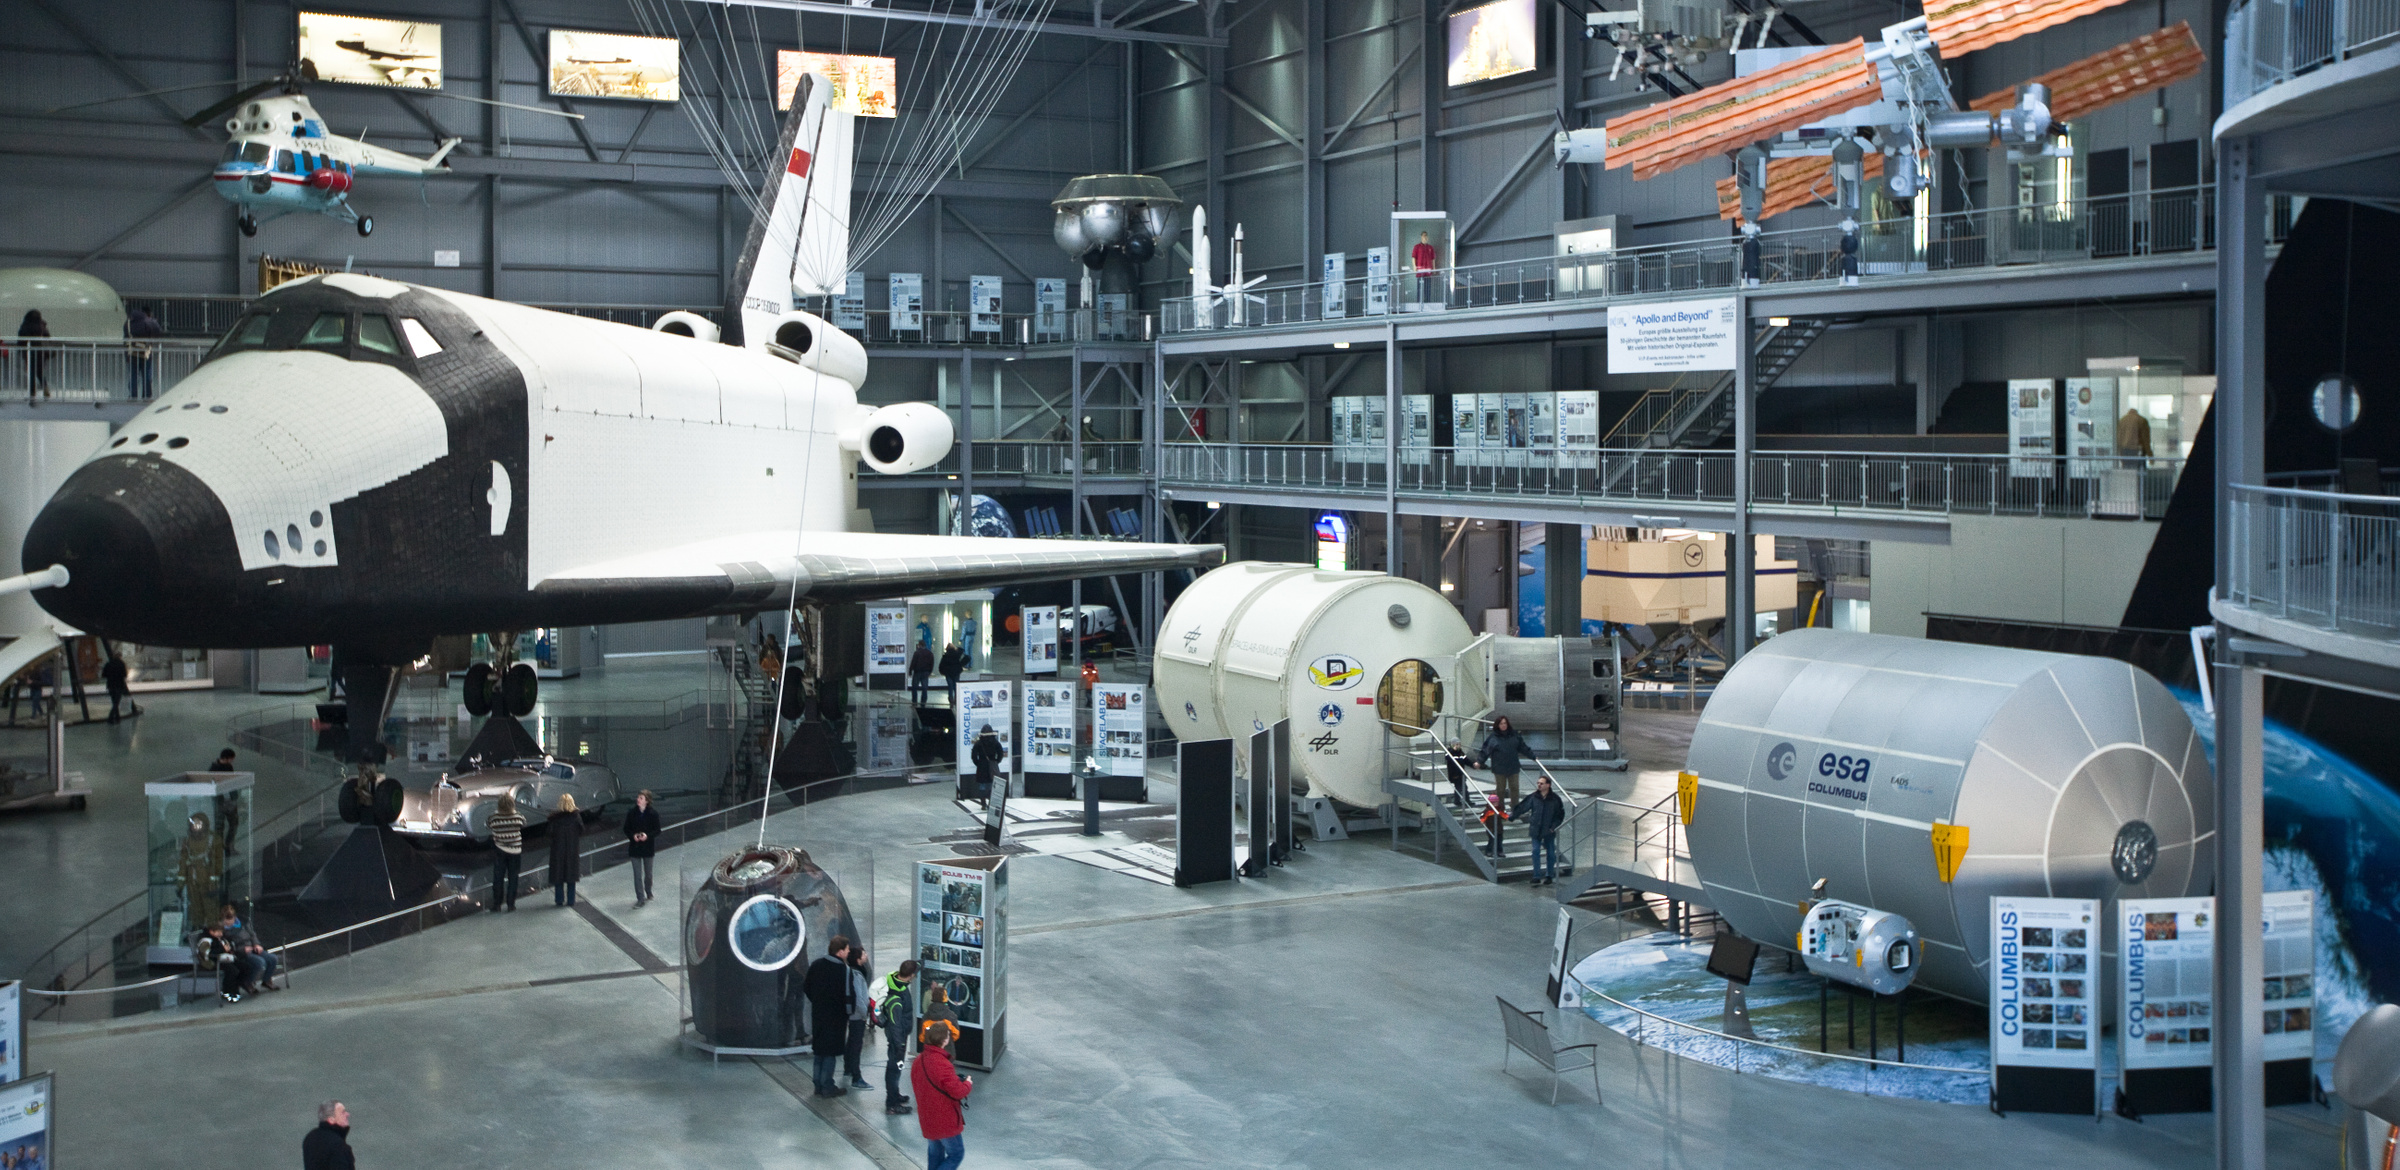 Самолёт – аналог "Бурана" в Музее техники в Шпайере. Фото © Музей техники в Шпайере